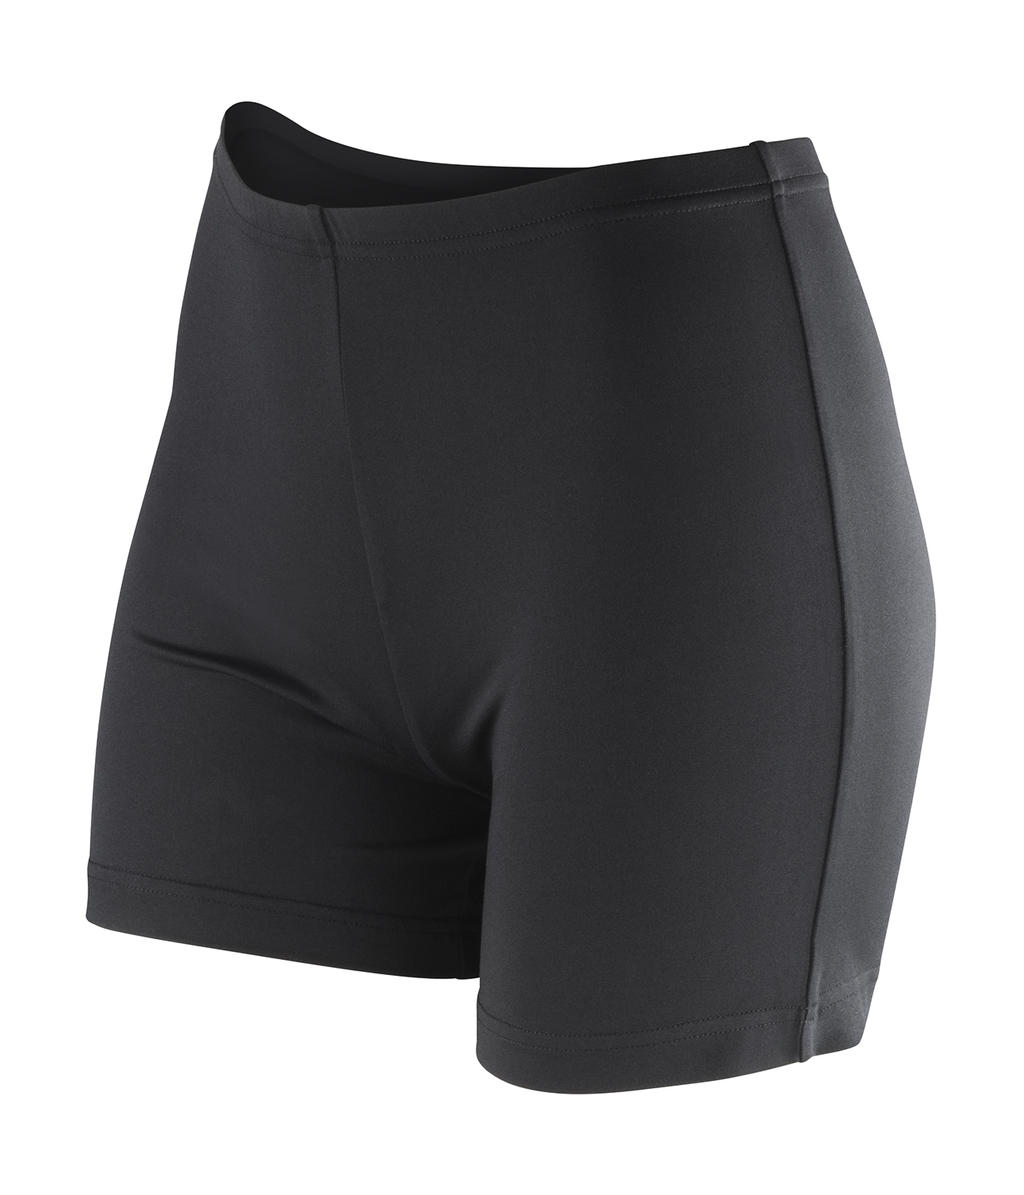  Womens Impact Softex? Shorts in Farbe Black